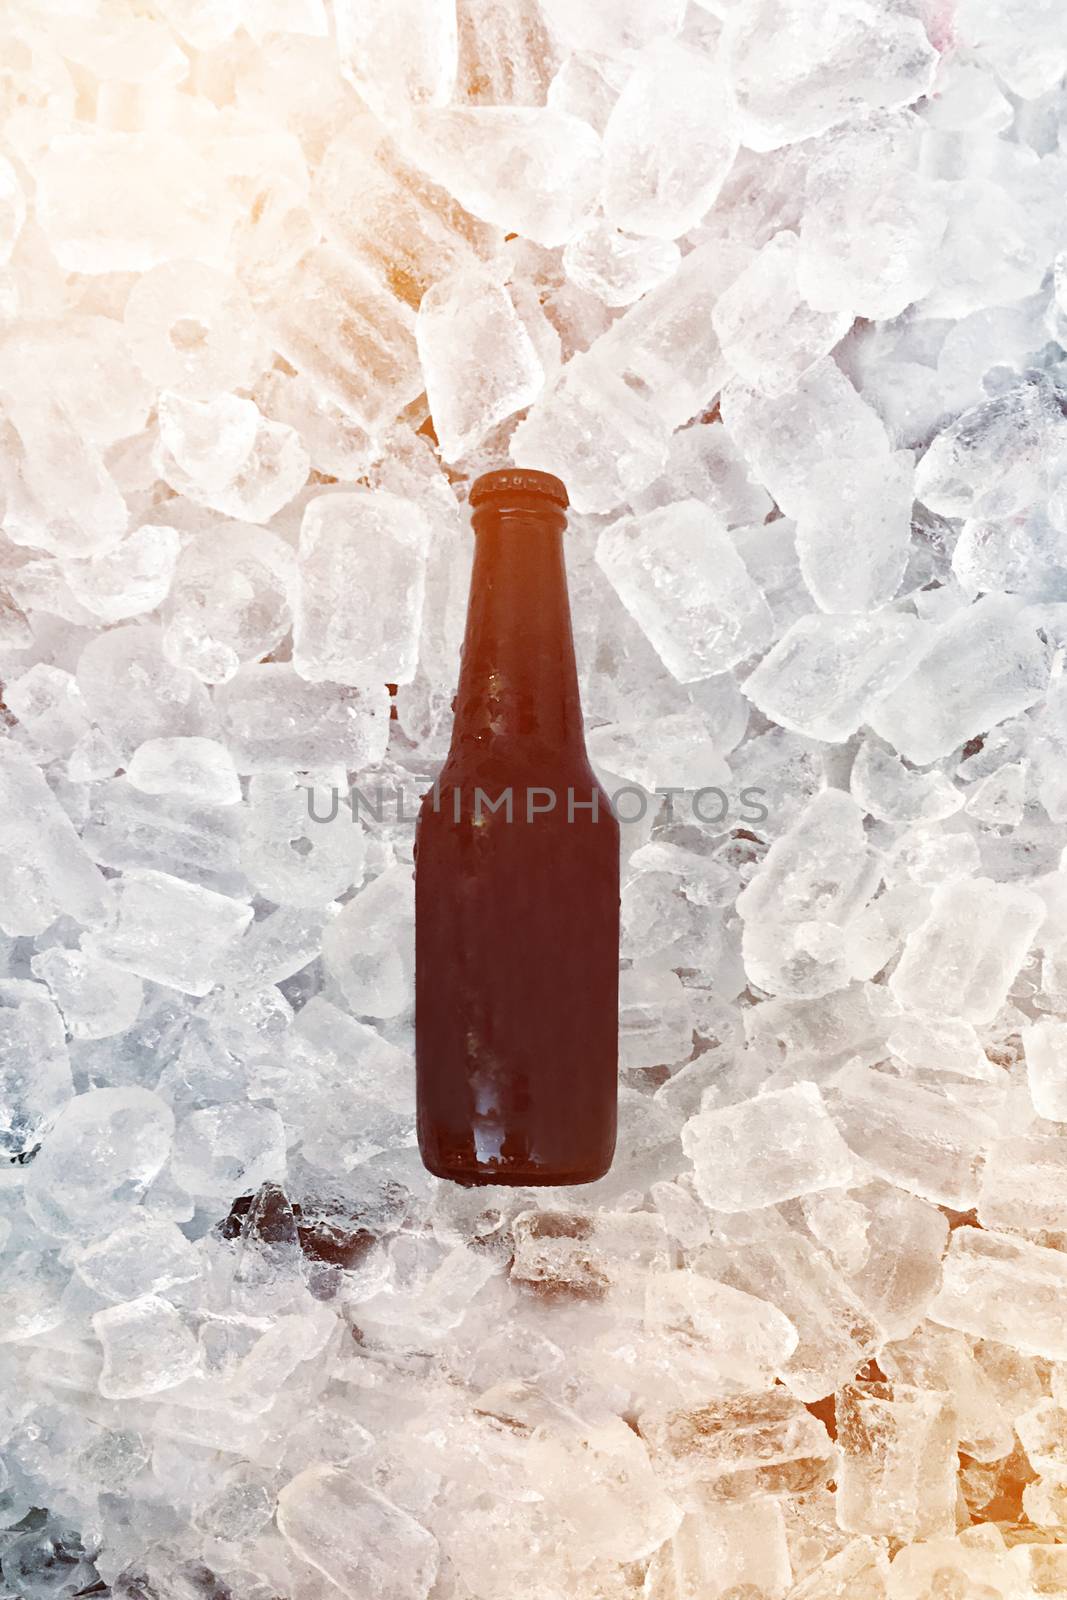 Black Bottle of beer on ice